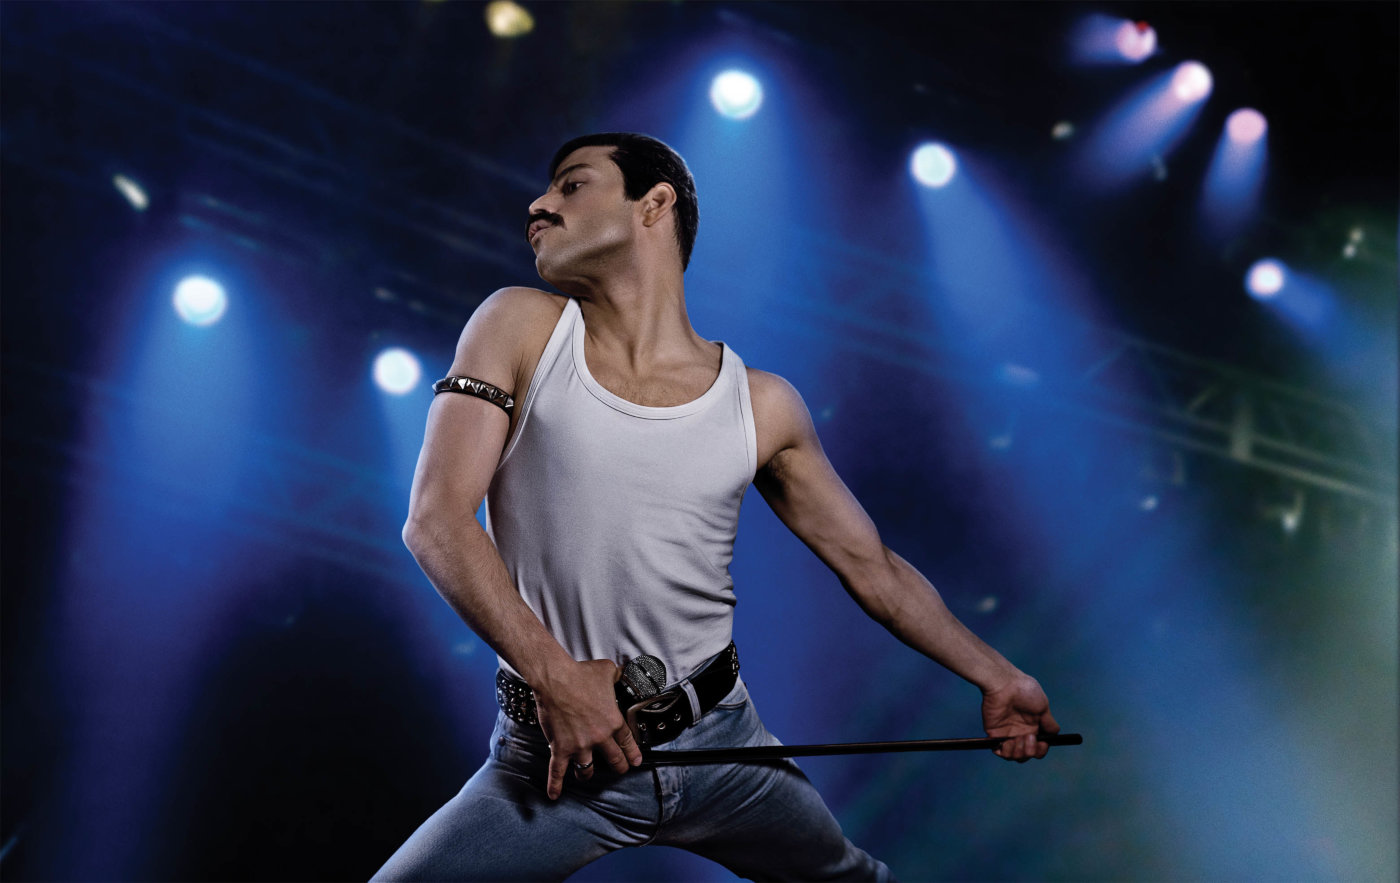 Crítica: Bohemian Rhapsody